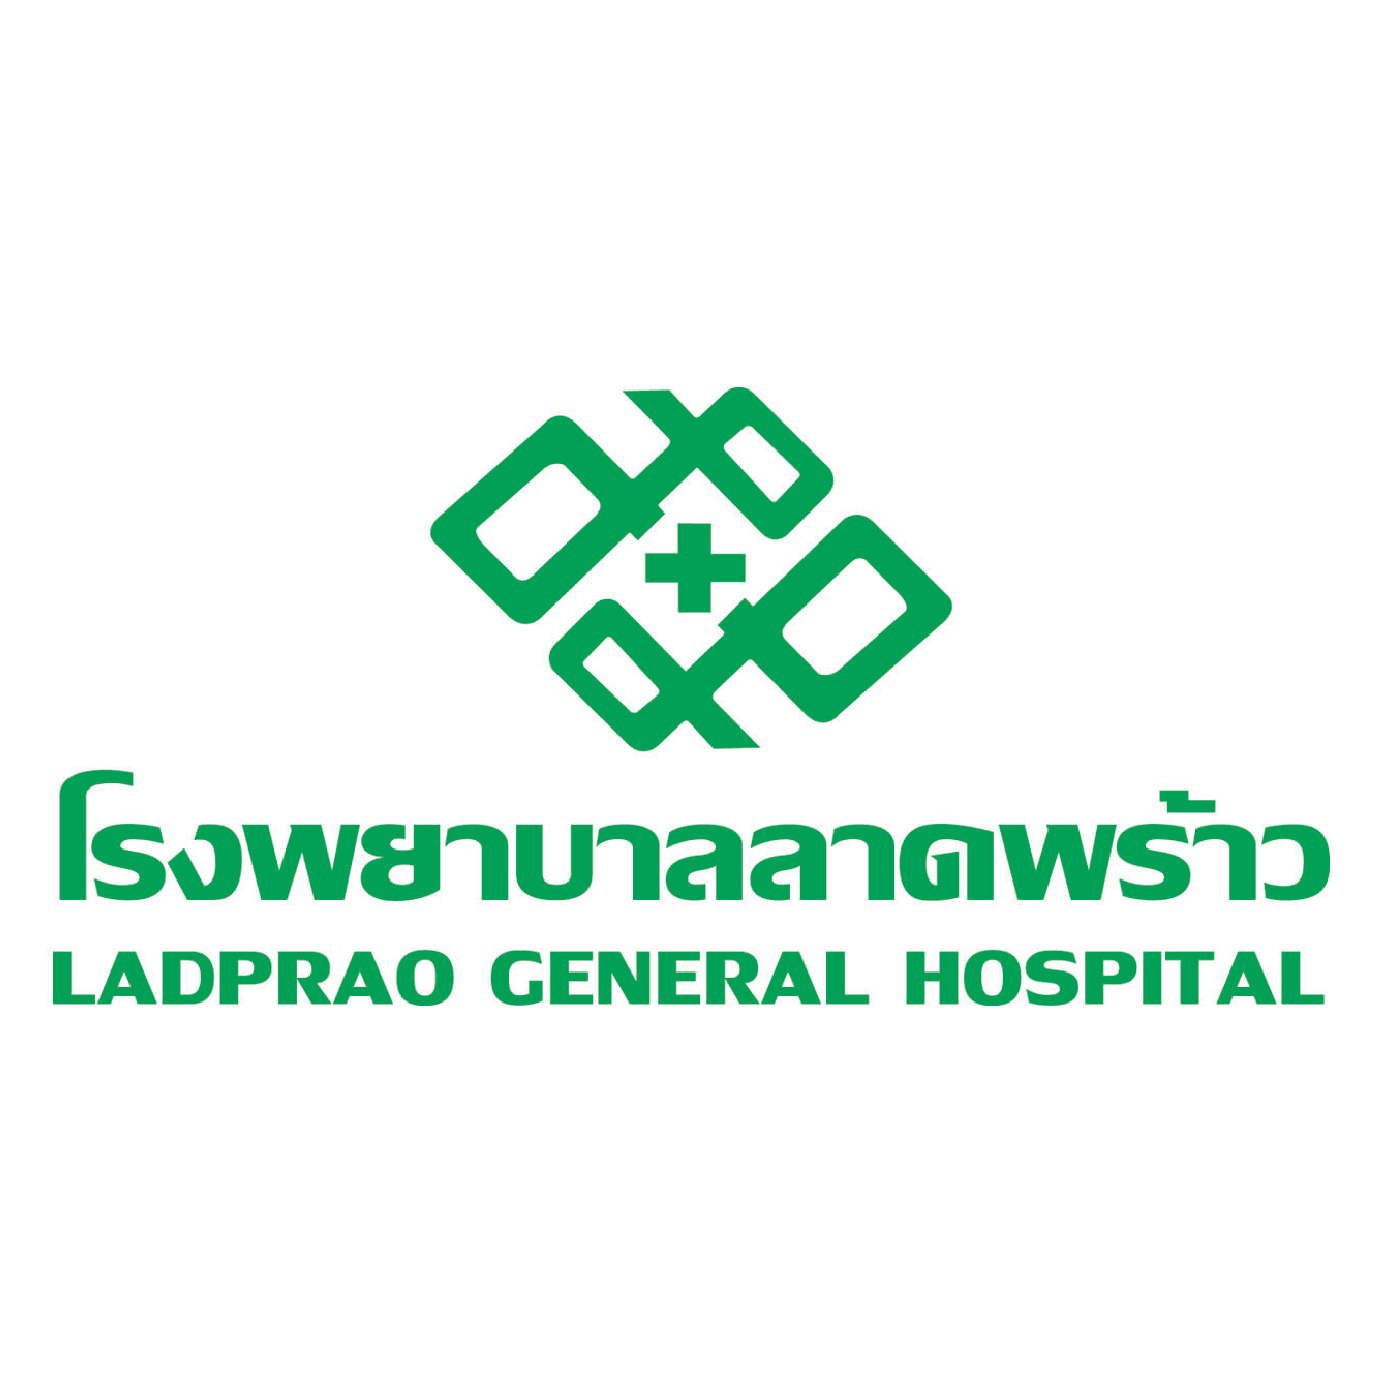 Ladprao General Hospital 01